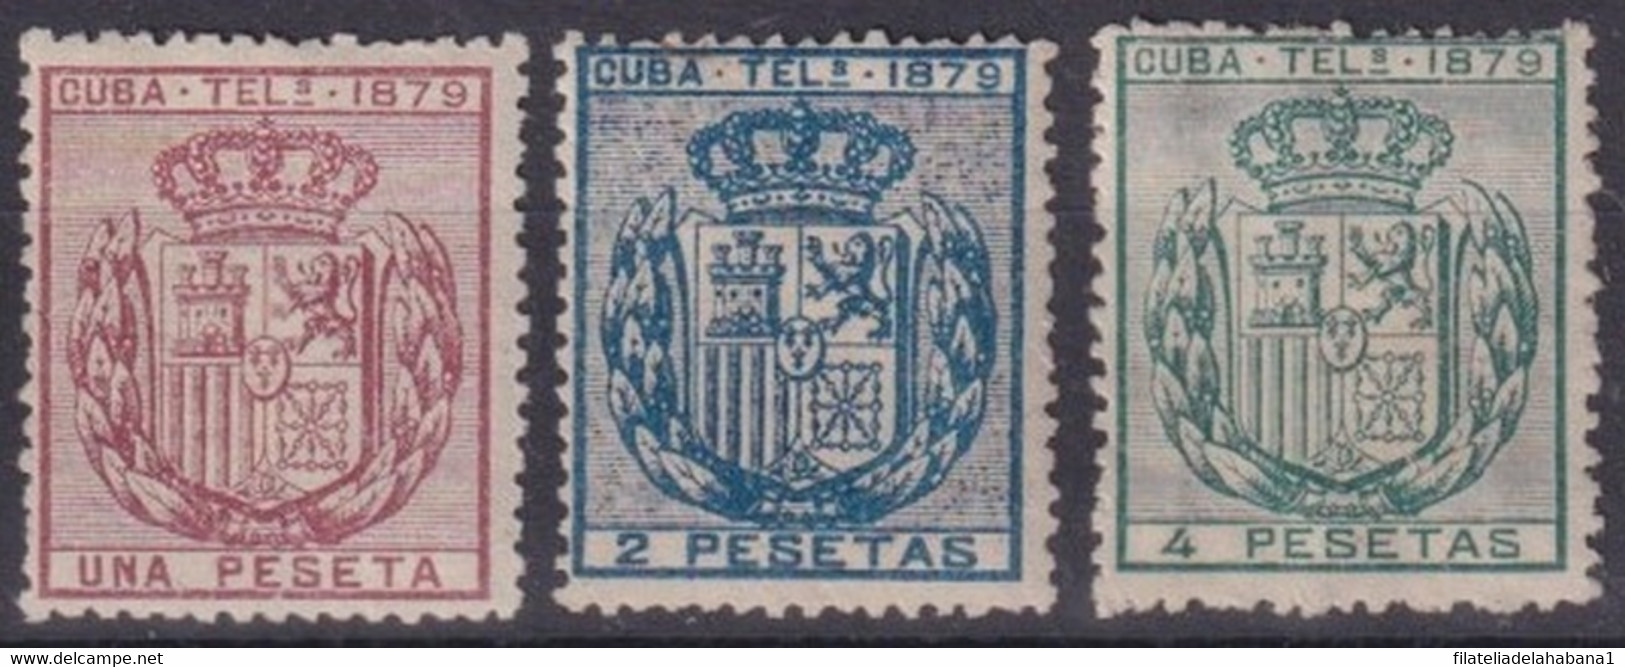 1879-166 CUBA SPAIN ESPAÑA 1879 COMPLETE SET TELEGRAPH TELEGRAFOS UNUSED NO GUM. - Telegrafo